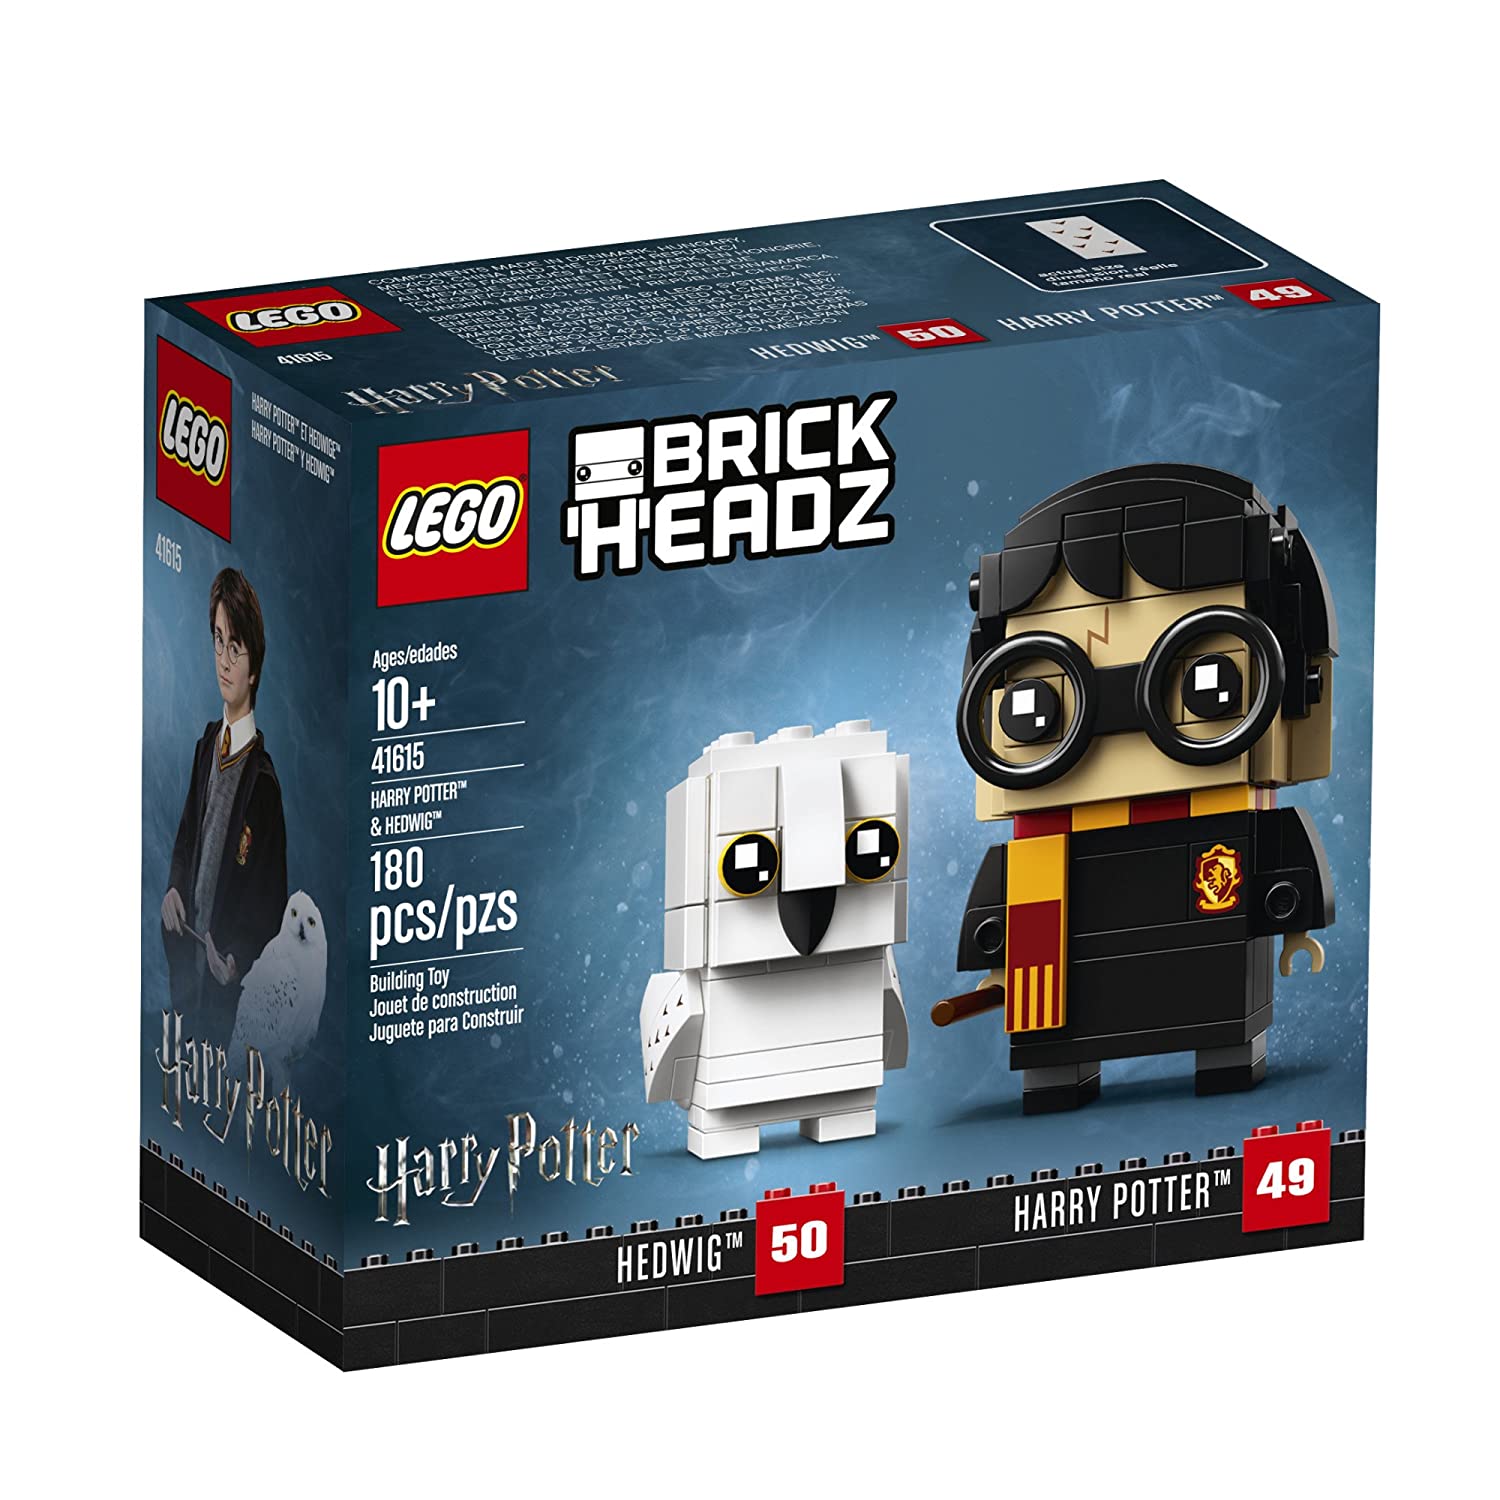 11 Best Lego Brickheadz 2023 - Buying Guide & Reviews 9